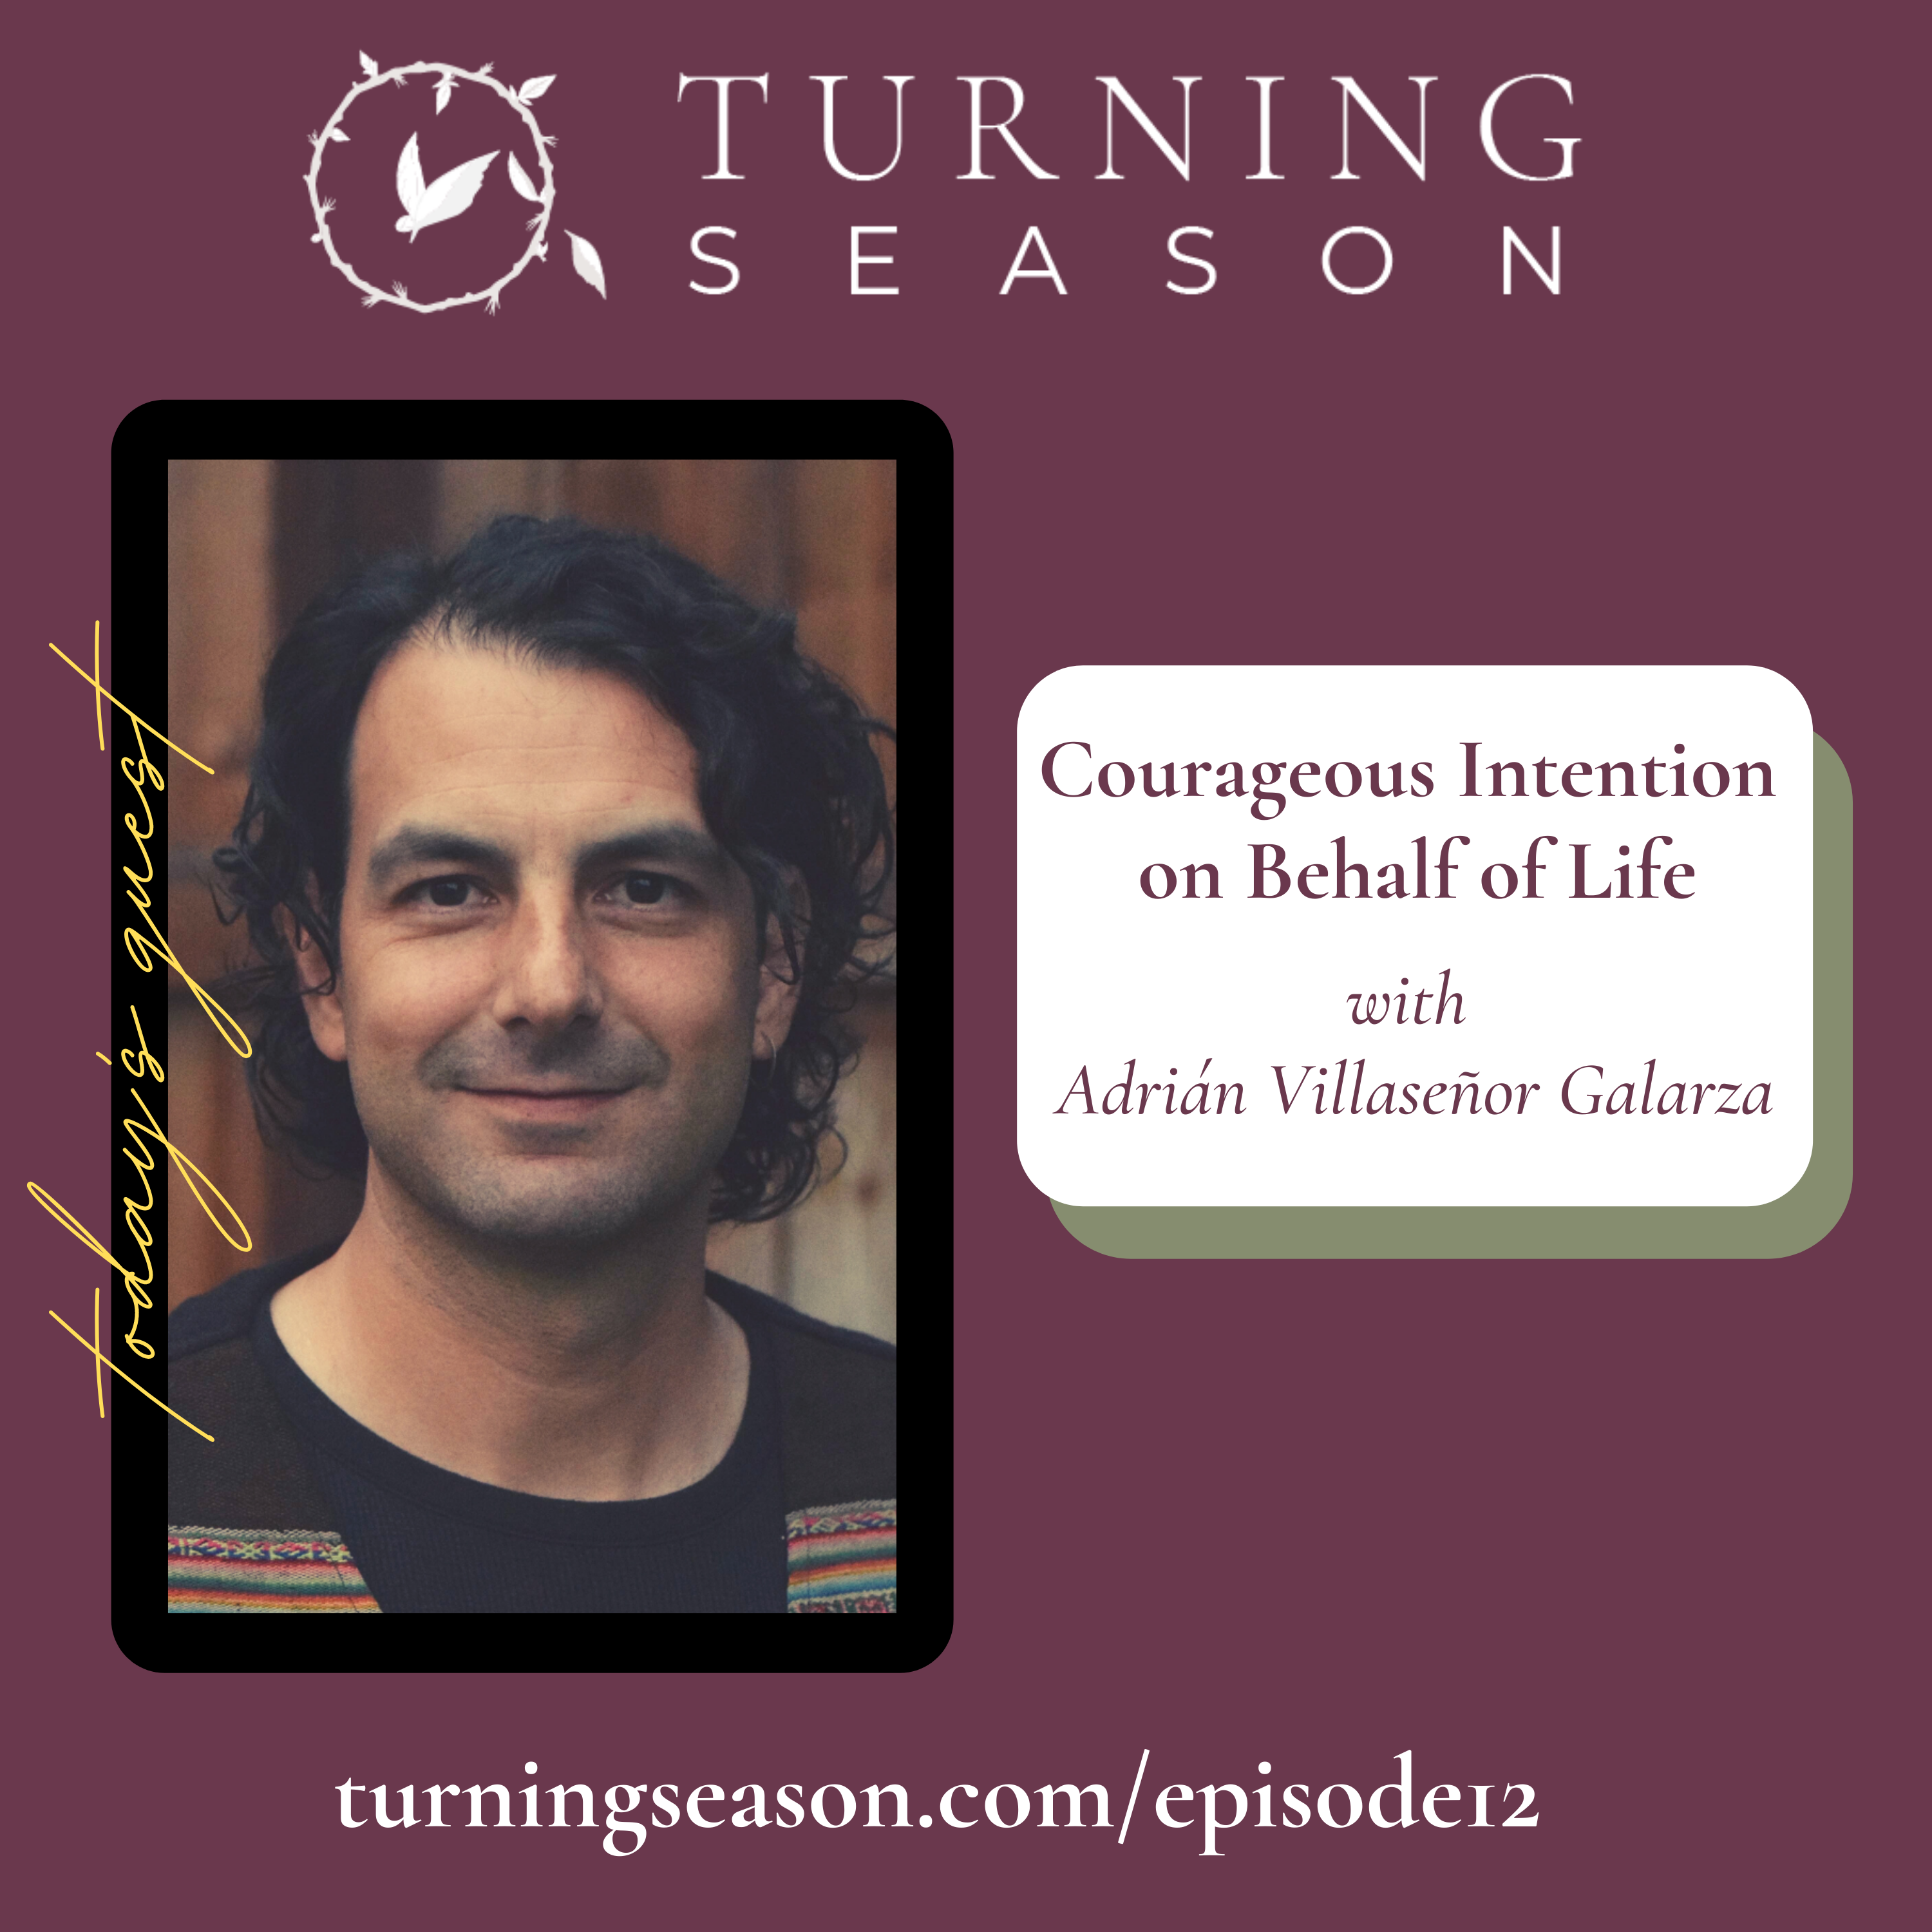 Turning Season Podcast Episode 12 with Adrián Villaseñor Galarza hosted by Leilani Navar turningseason.com